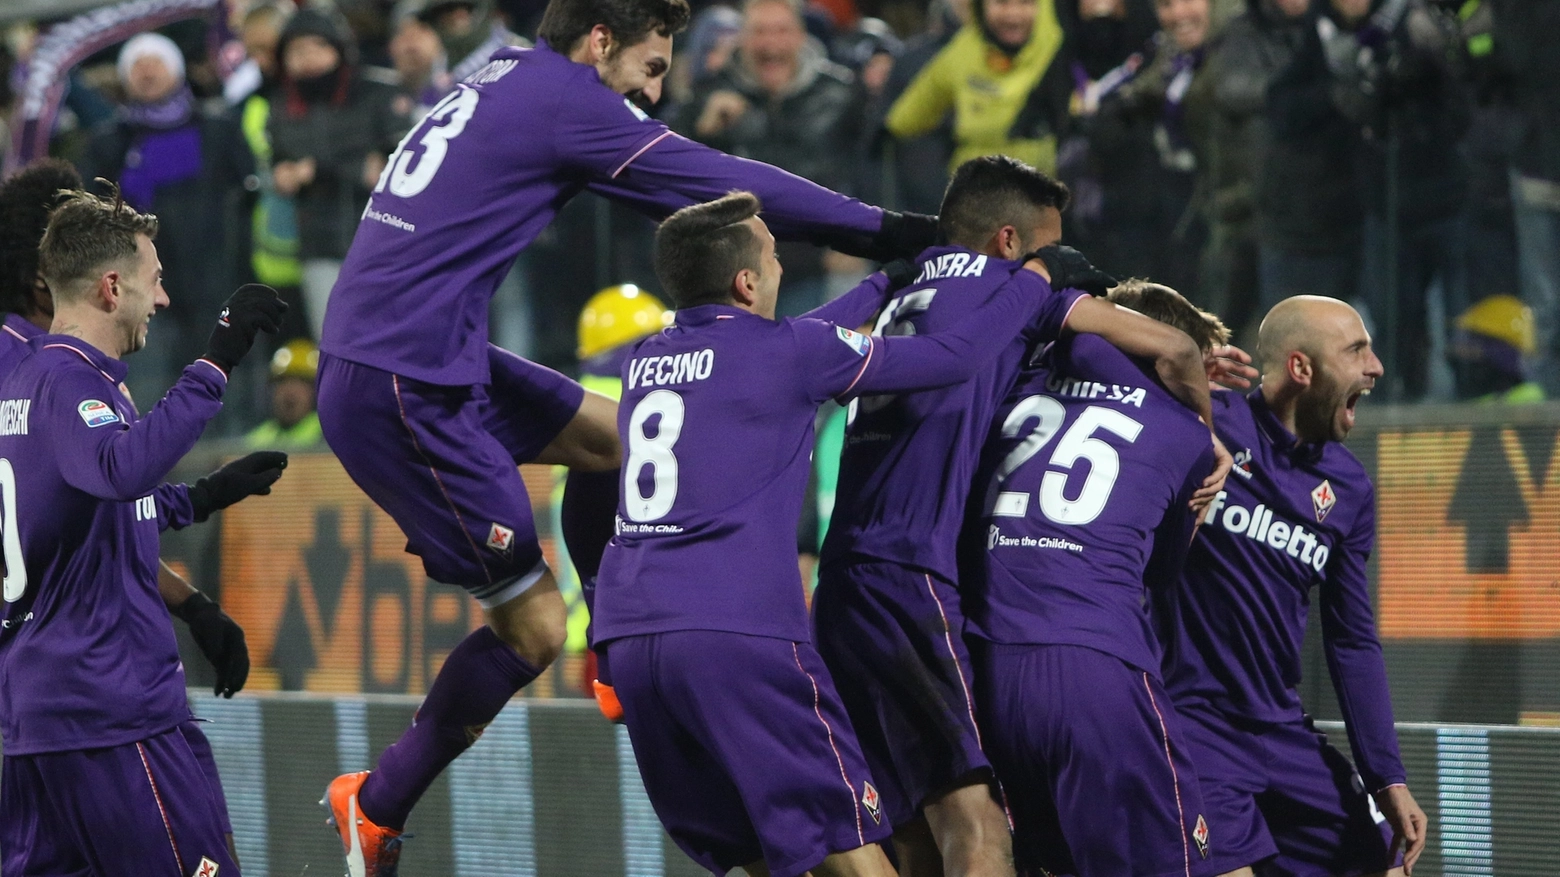 Fiorentina-Juventus 2-1. Esultanza viola (Foto Germogli)